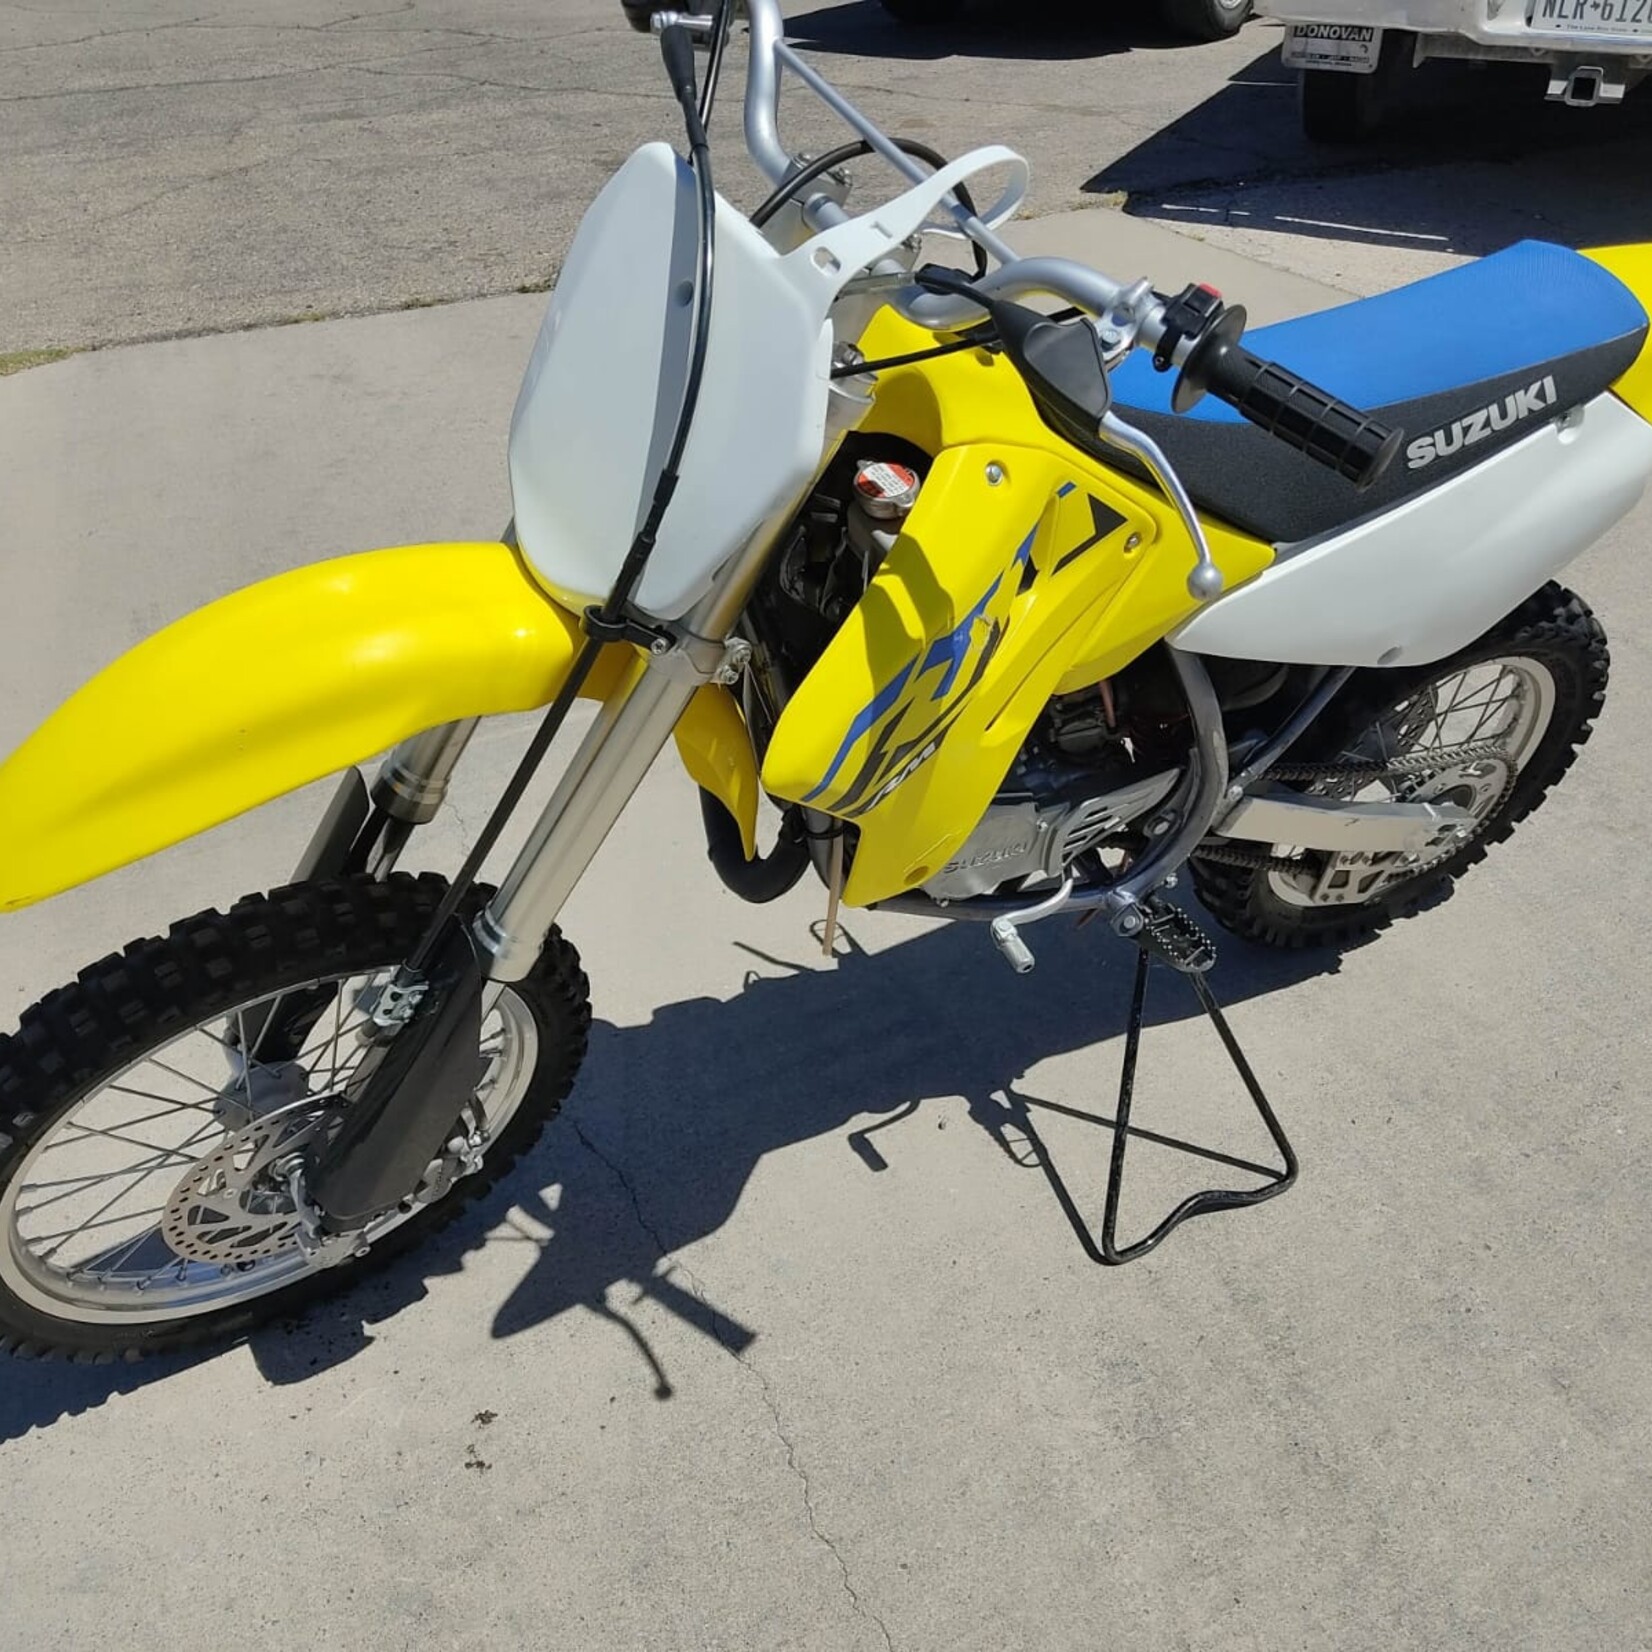 2021 Suzuki RM 85 Dirt Bike Motorcycle for Sale